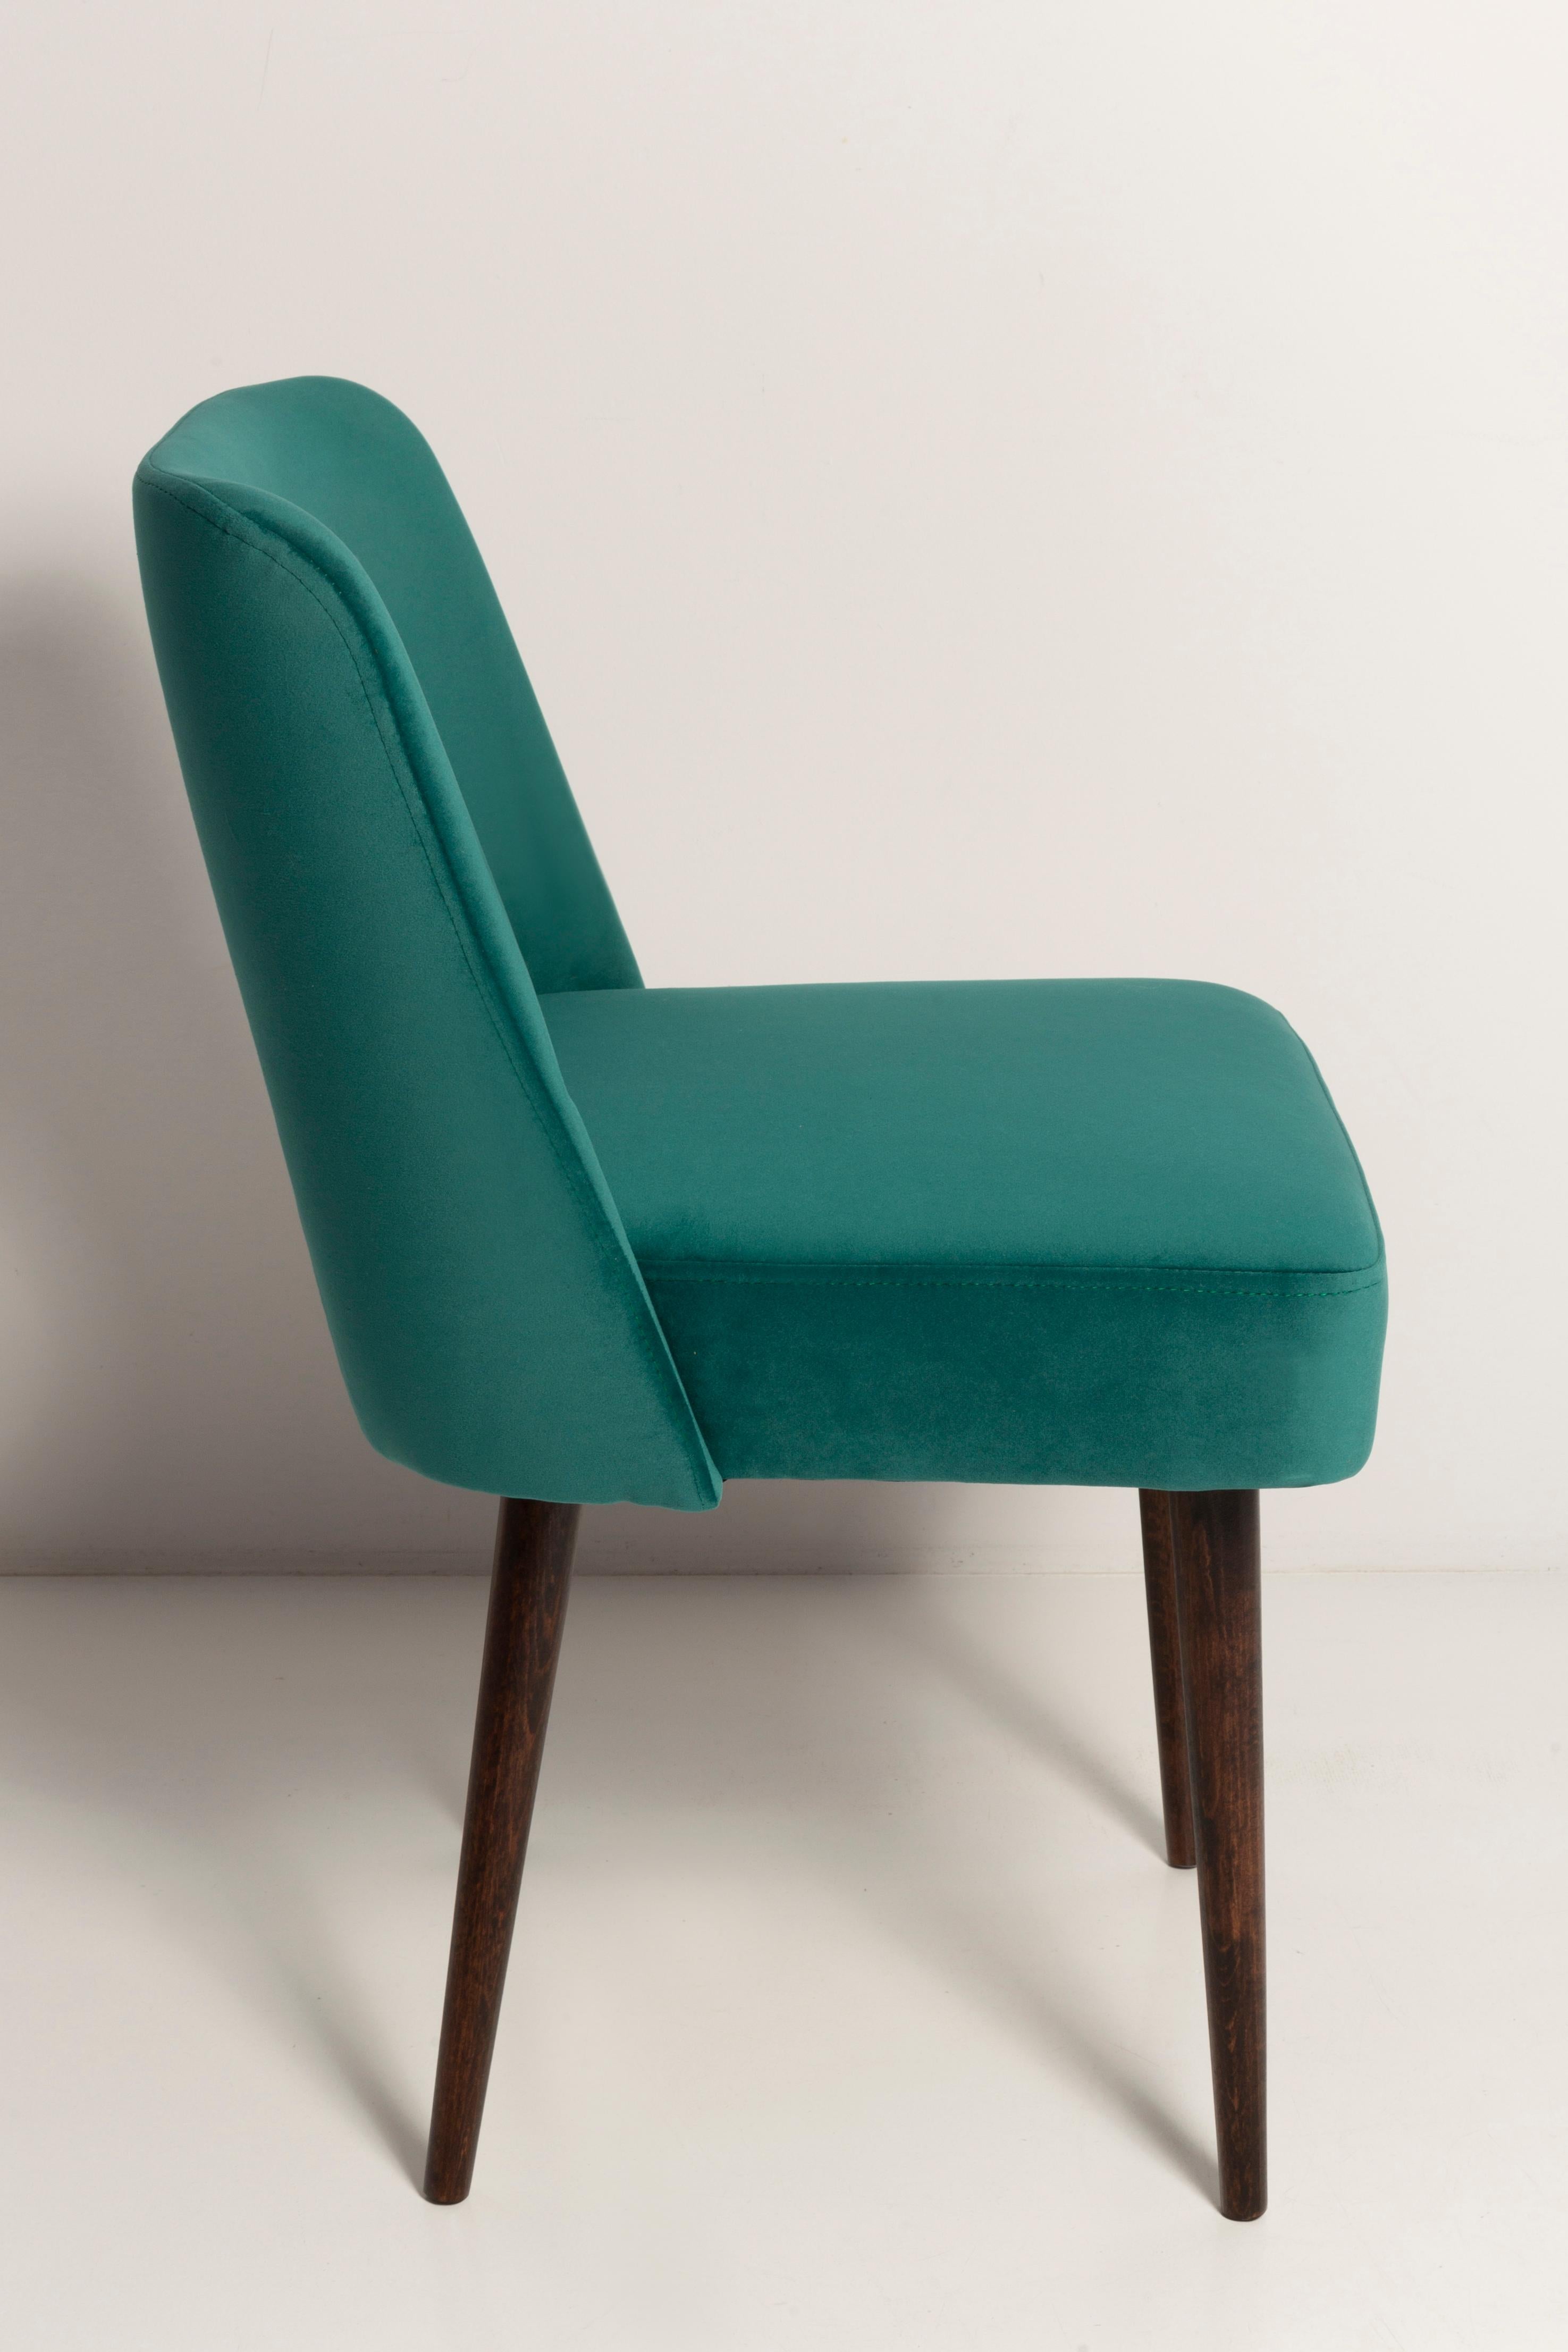 20th Century Set of Four Dark Green Velvet 'Shell' Chairs, Europe, 1960s For Sale